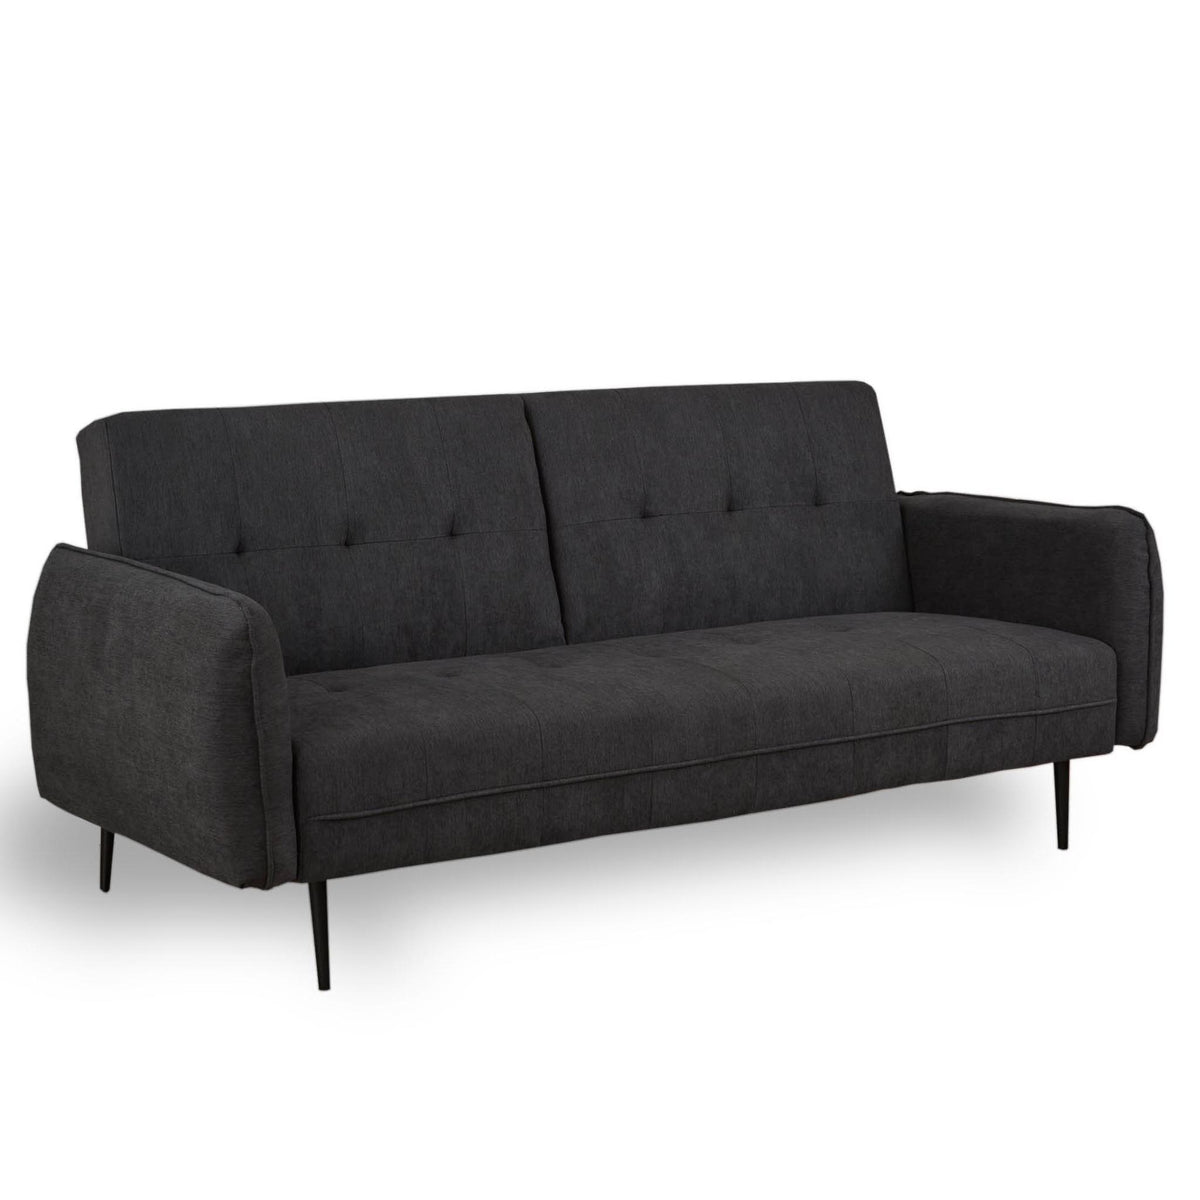 Askew Linen Click Clack Sofa Bed | Roseland – Roseland Furniture